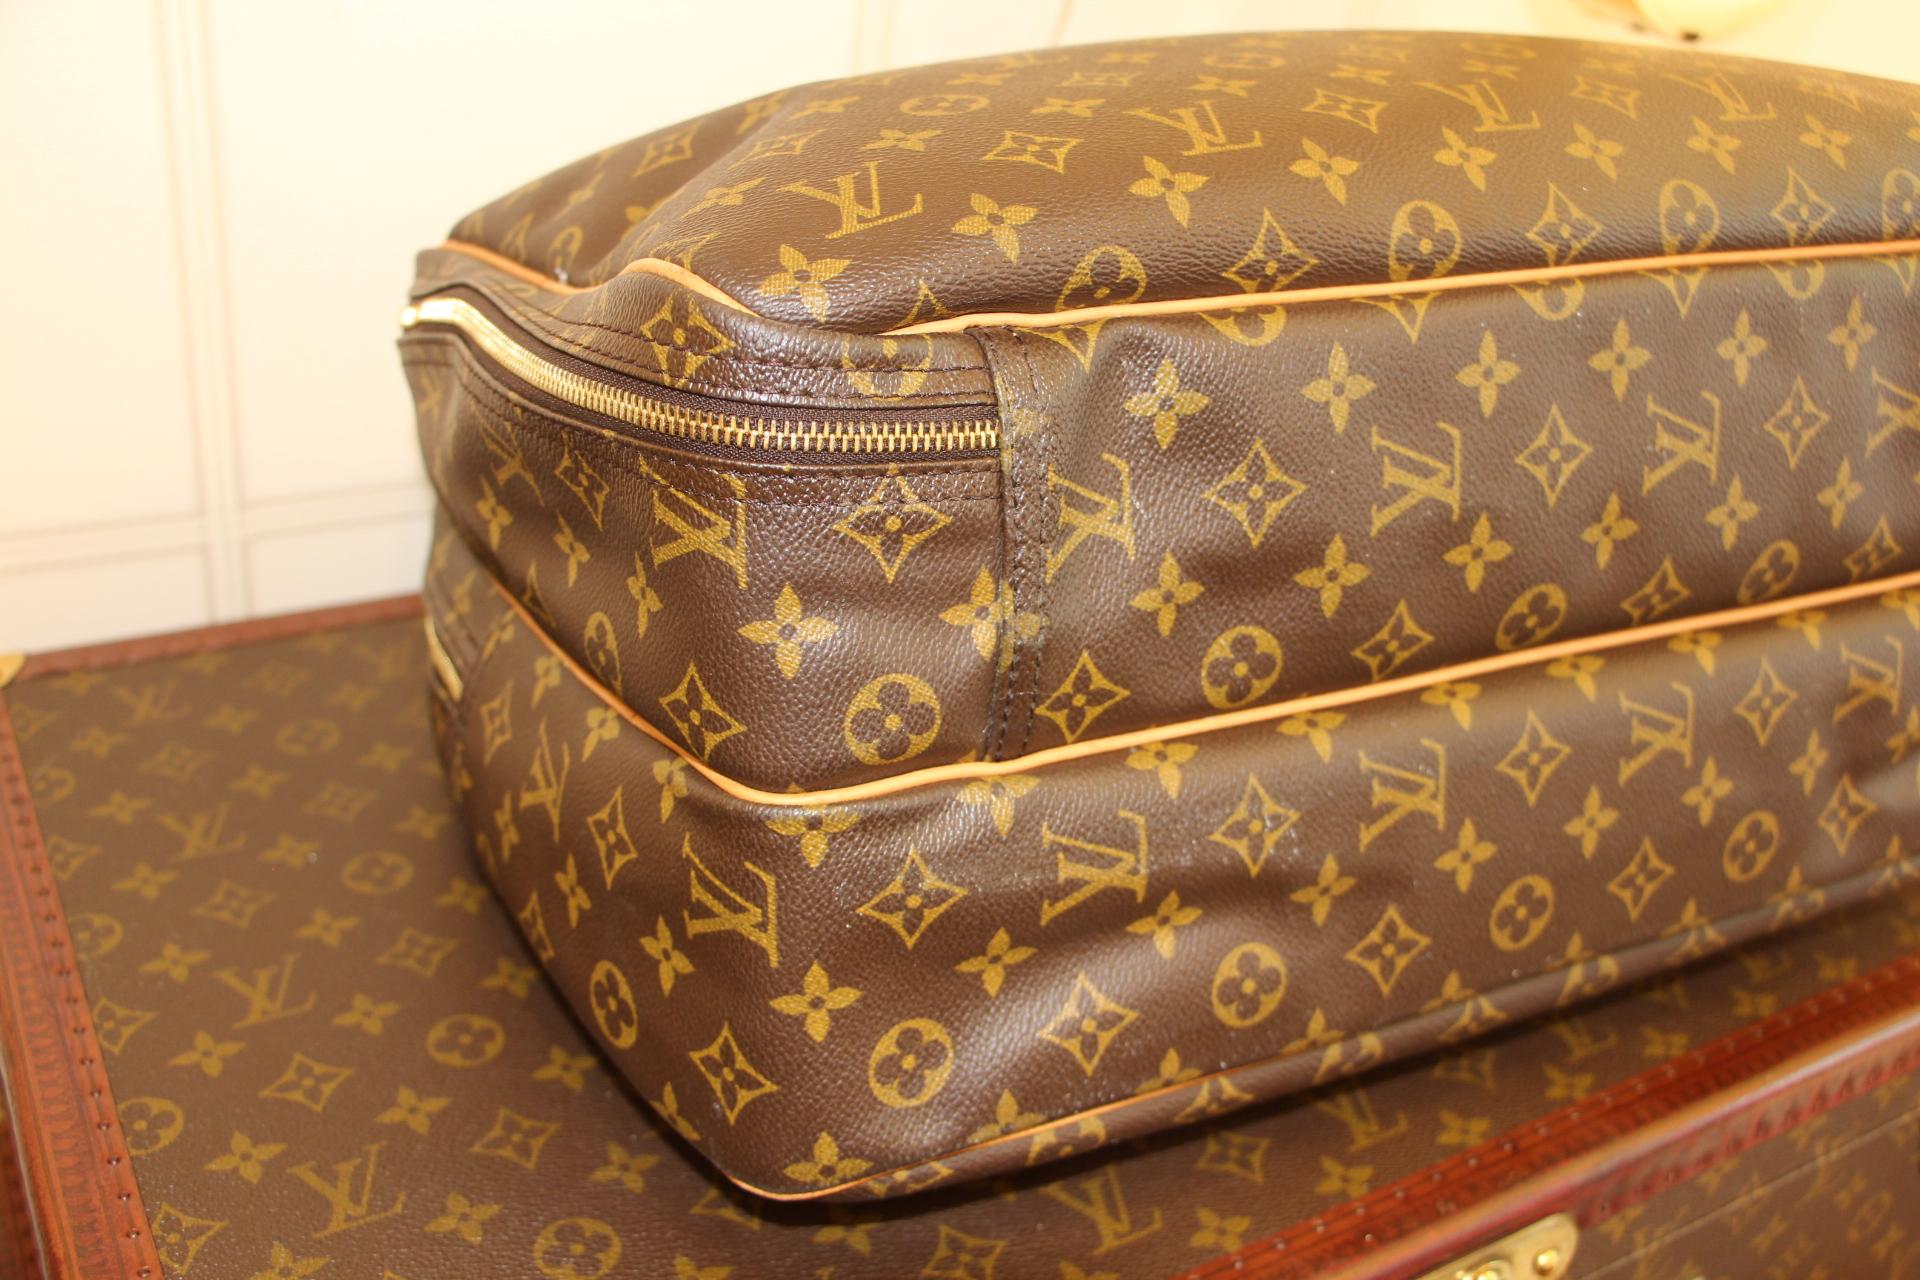 Louis Vuitton Bag in Monogram, 2 compartments 3